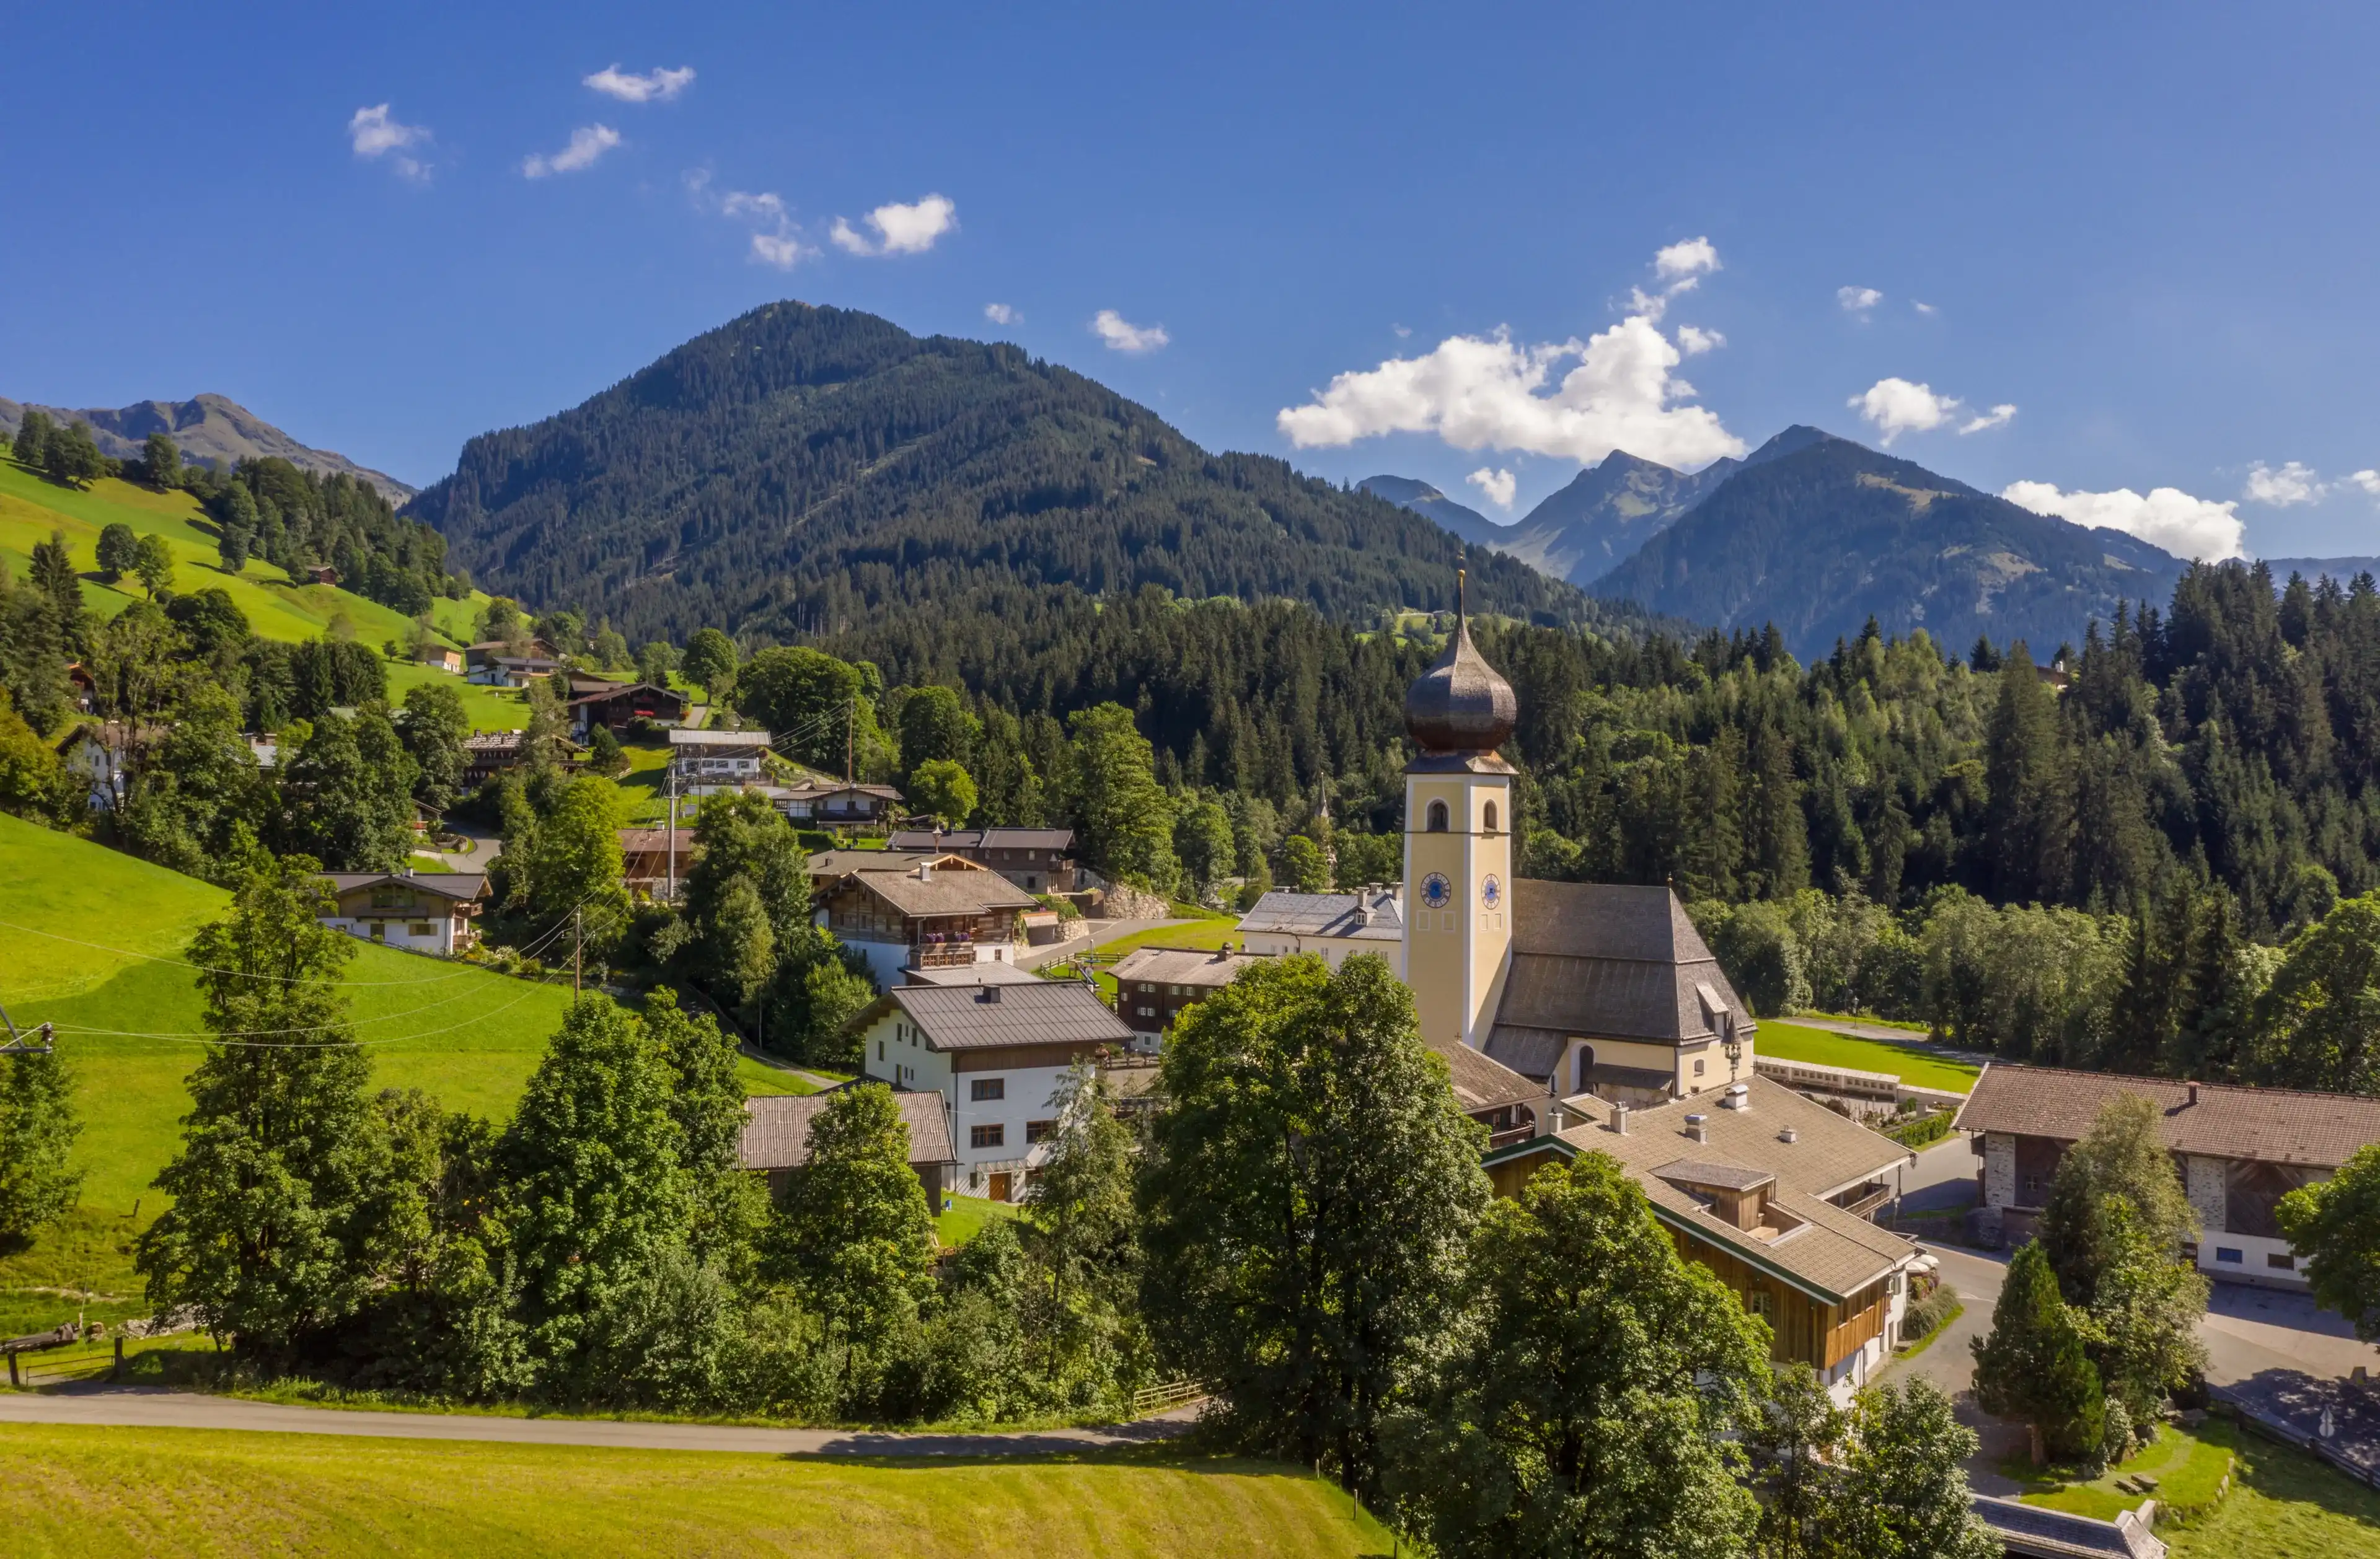 Best Kitzbühel hotels. Cheap hotels in Kitzbühel, Austria